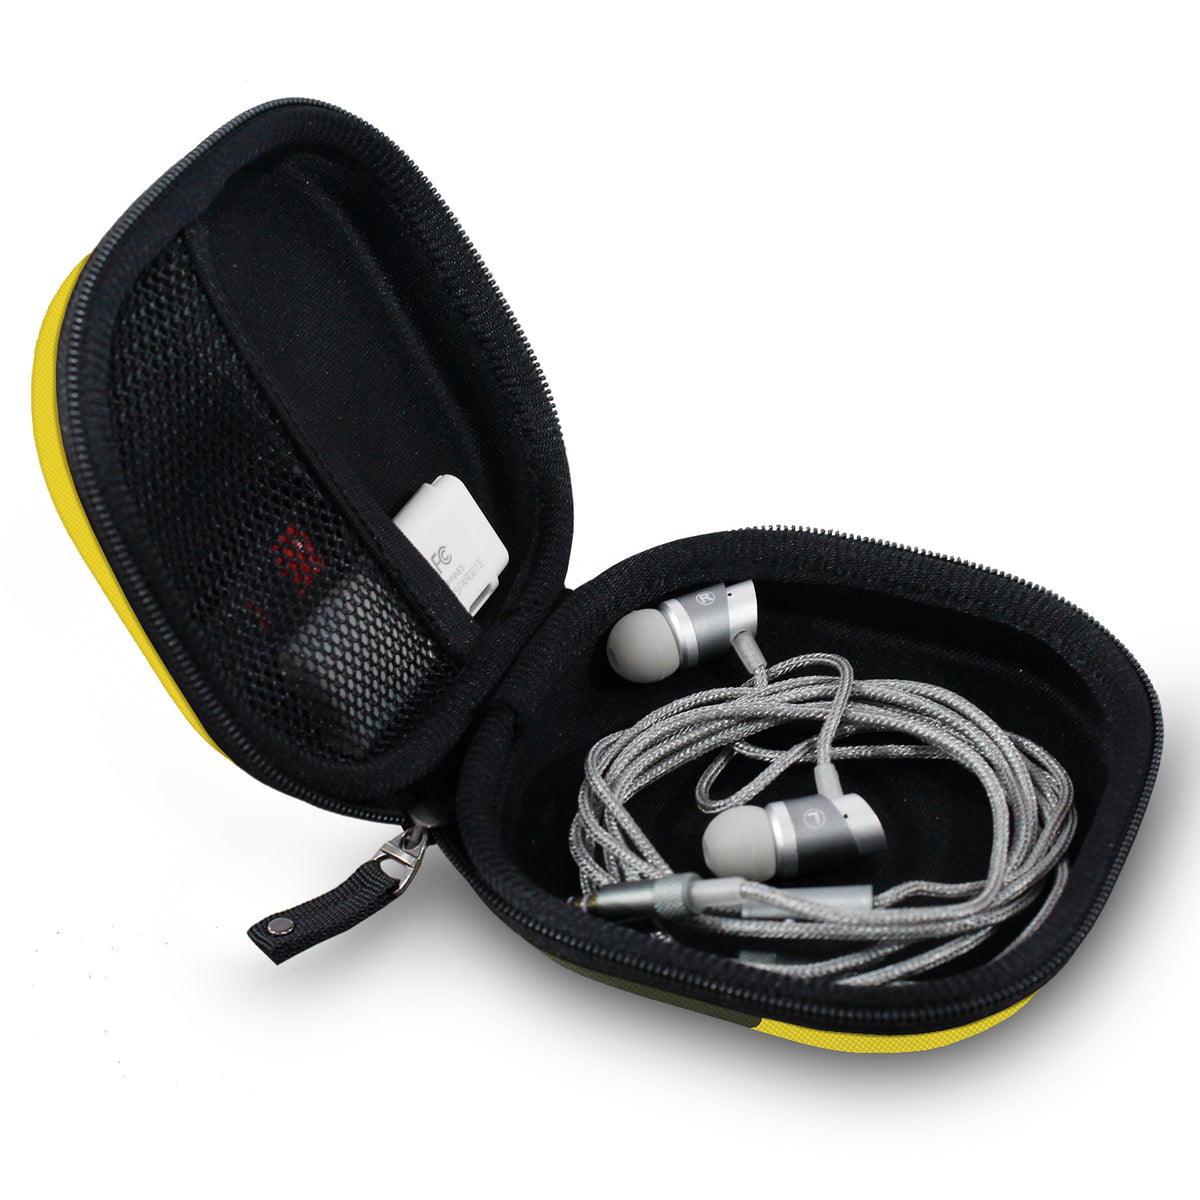 Earphone Carrying Case-Multi Purpose Pocket Storage with Carabiner Hook